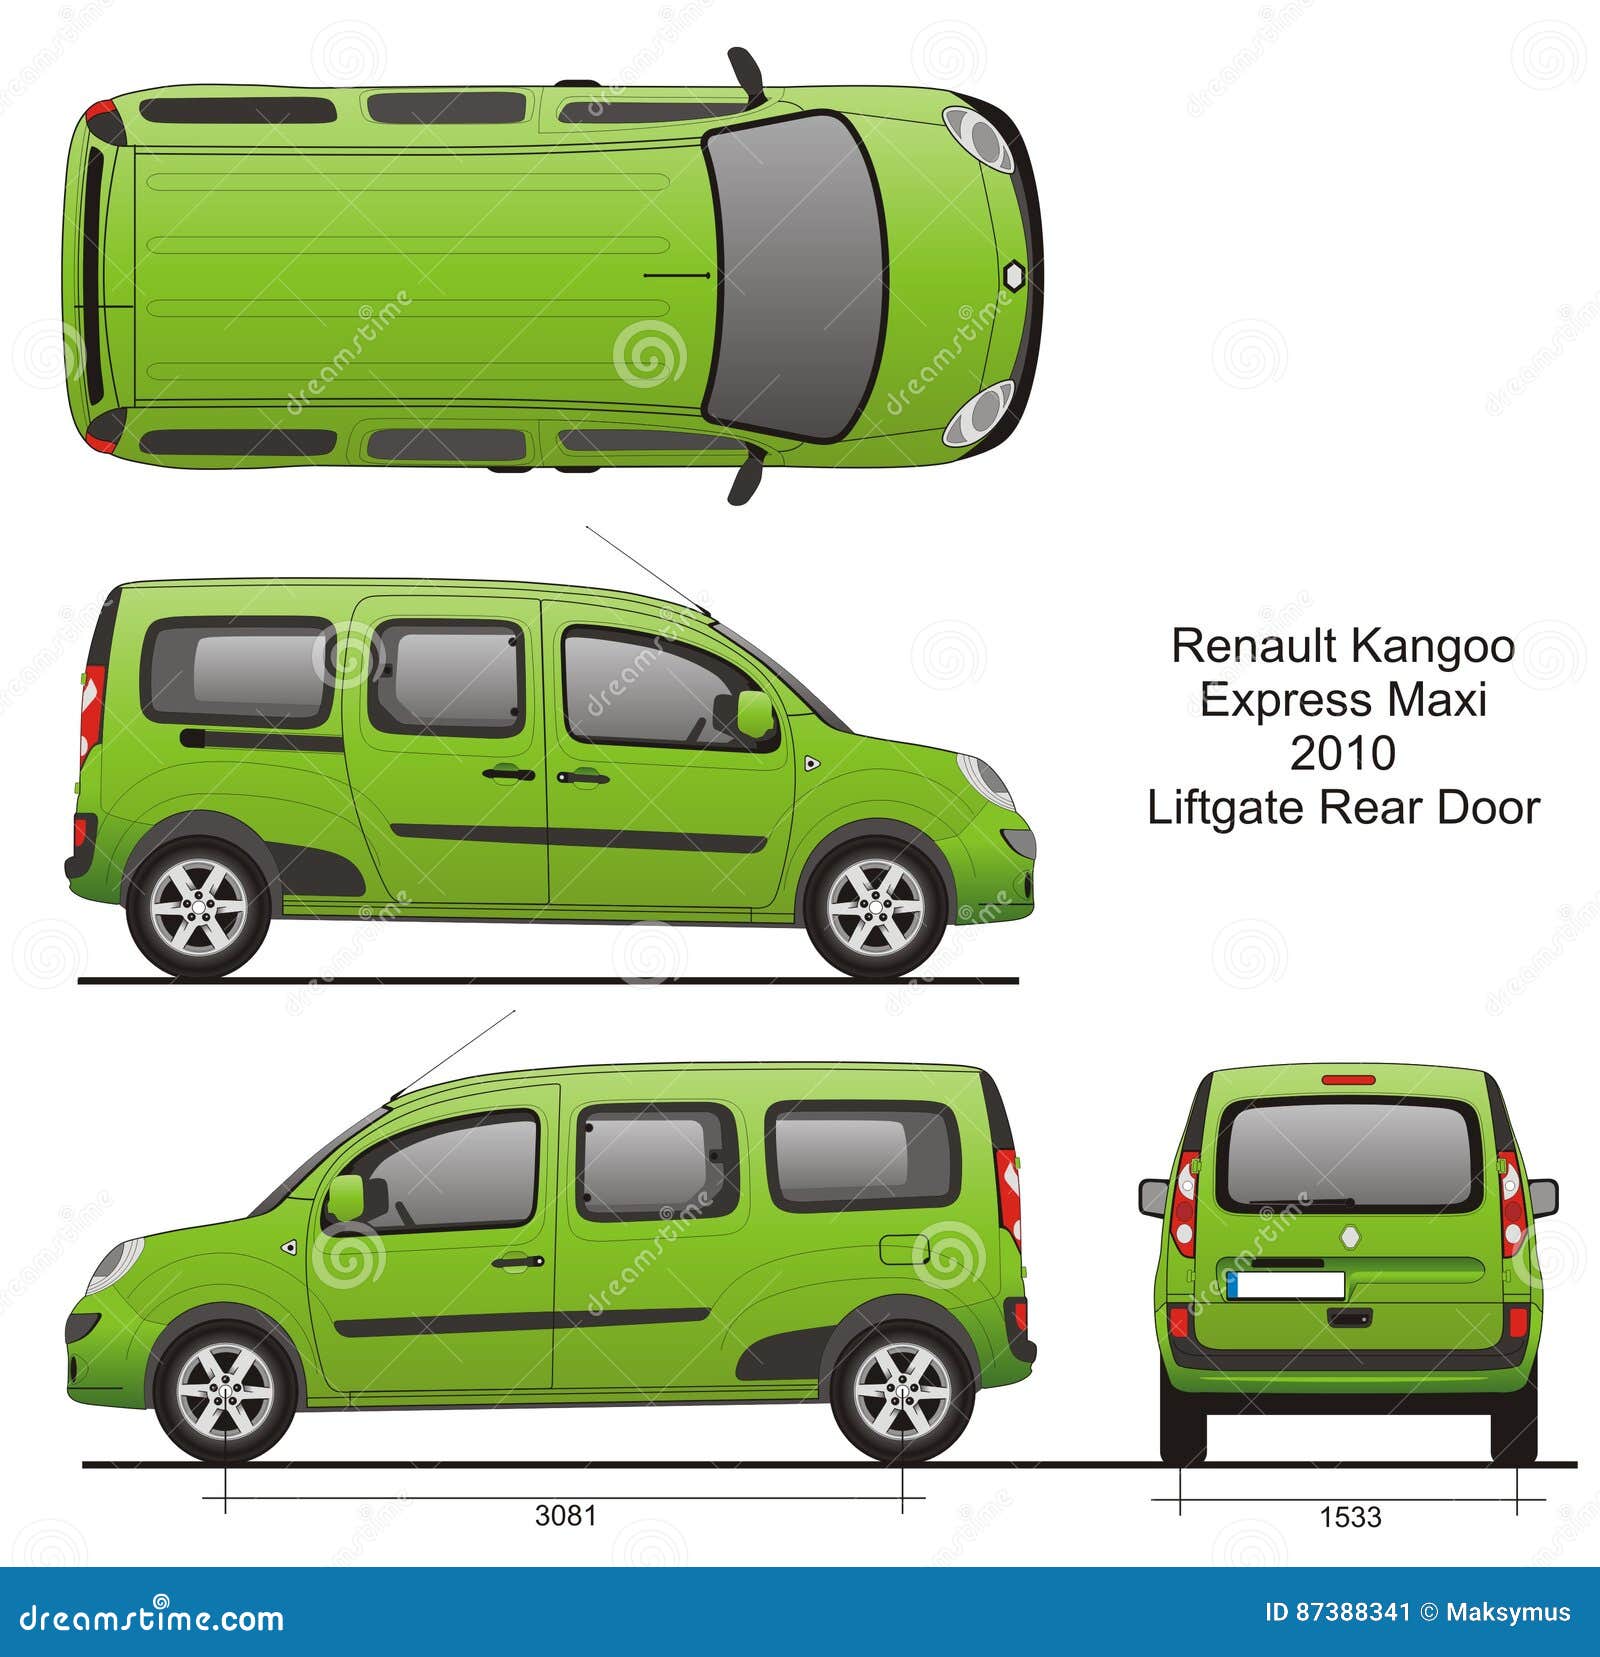 Renault Kangoo Express Maxi 2010. Renault Kangoo Express Maxi Combi Van 2010, Skala1:10 der Hebetür-hinteren Tür